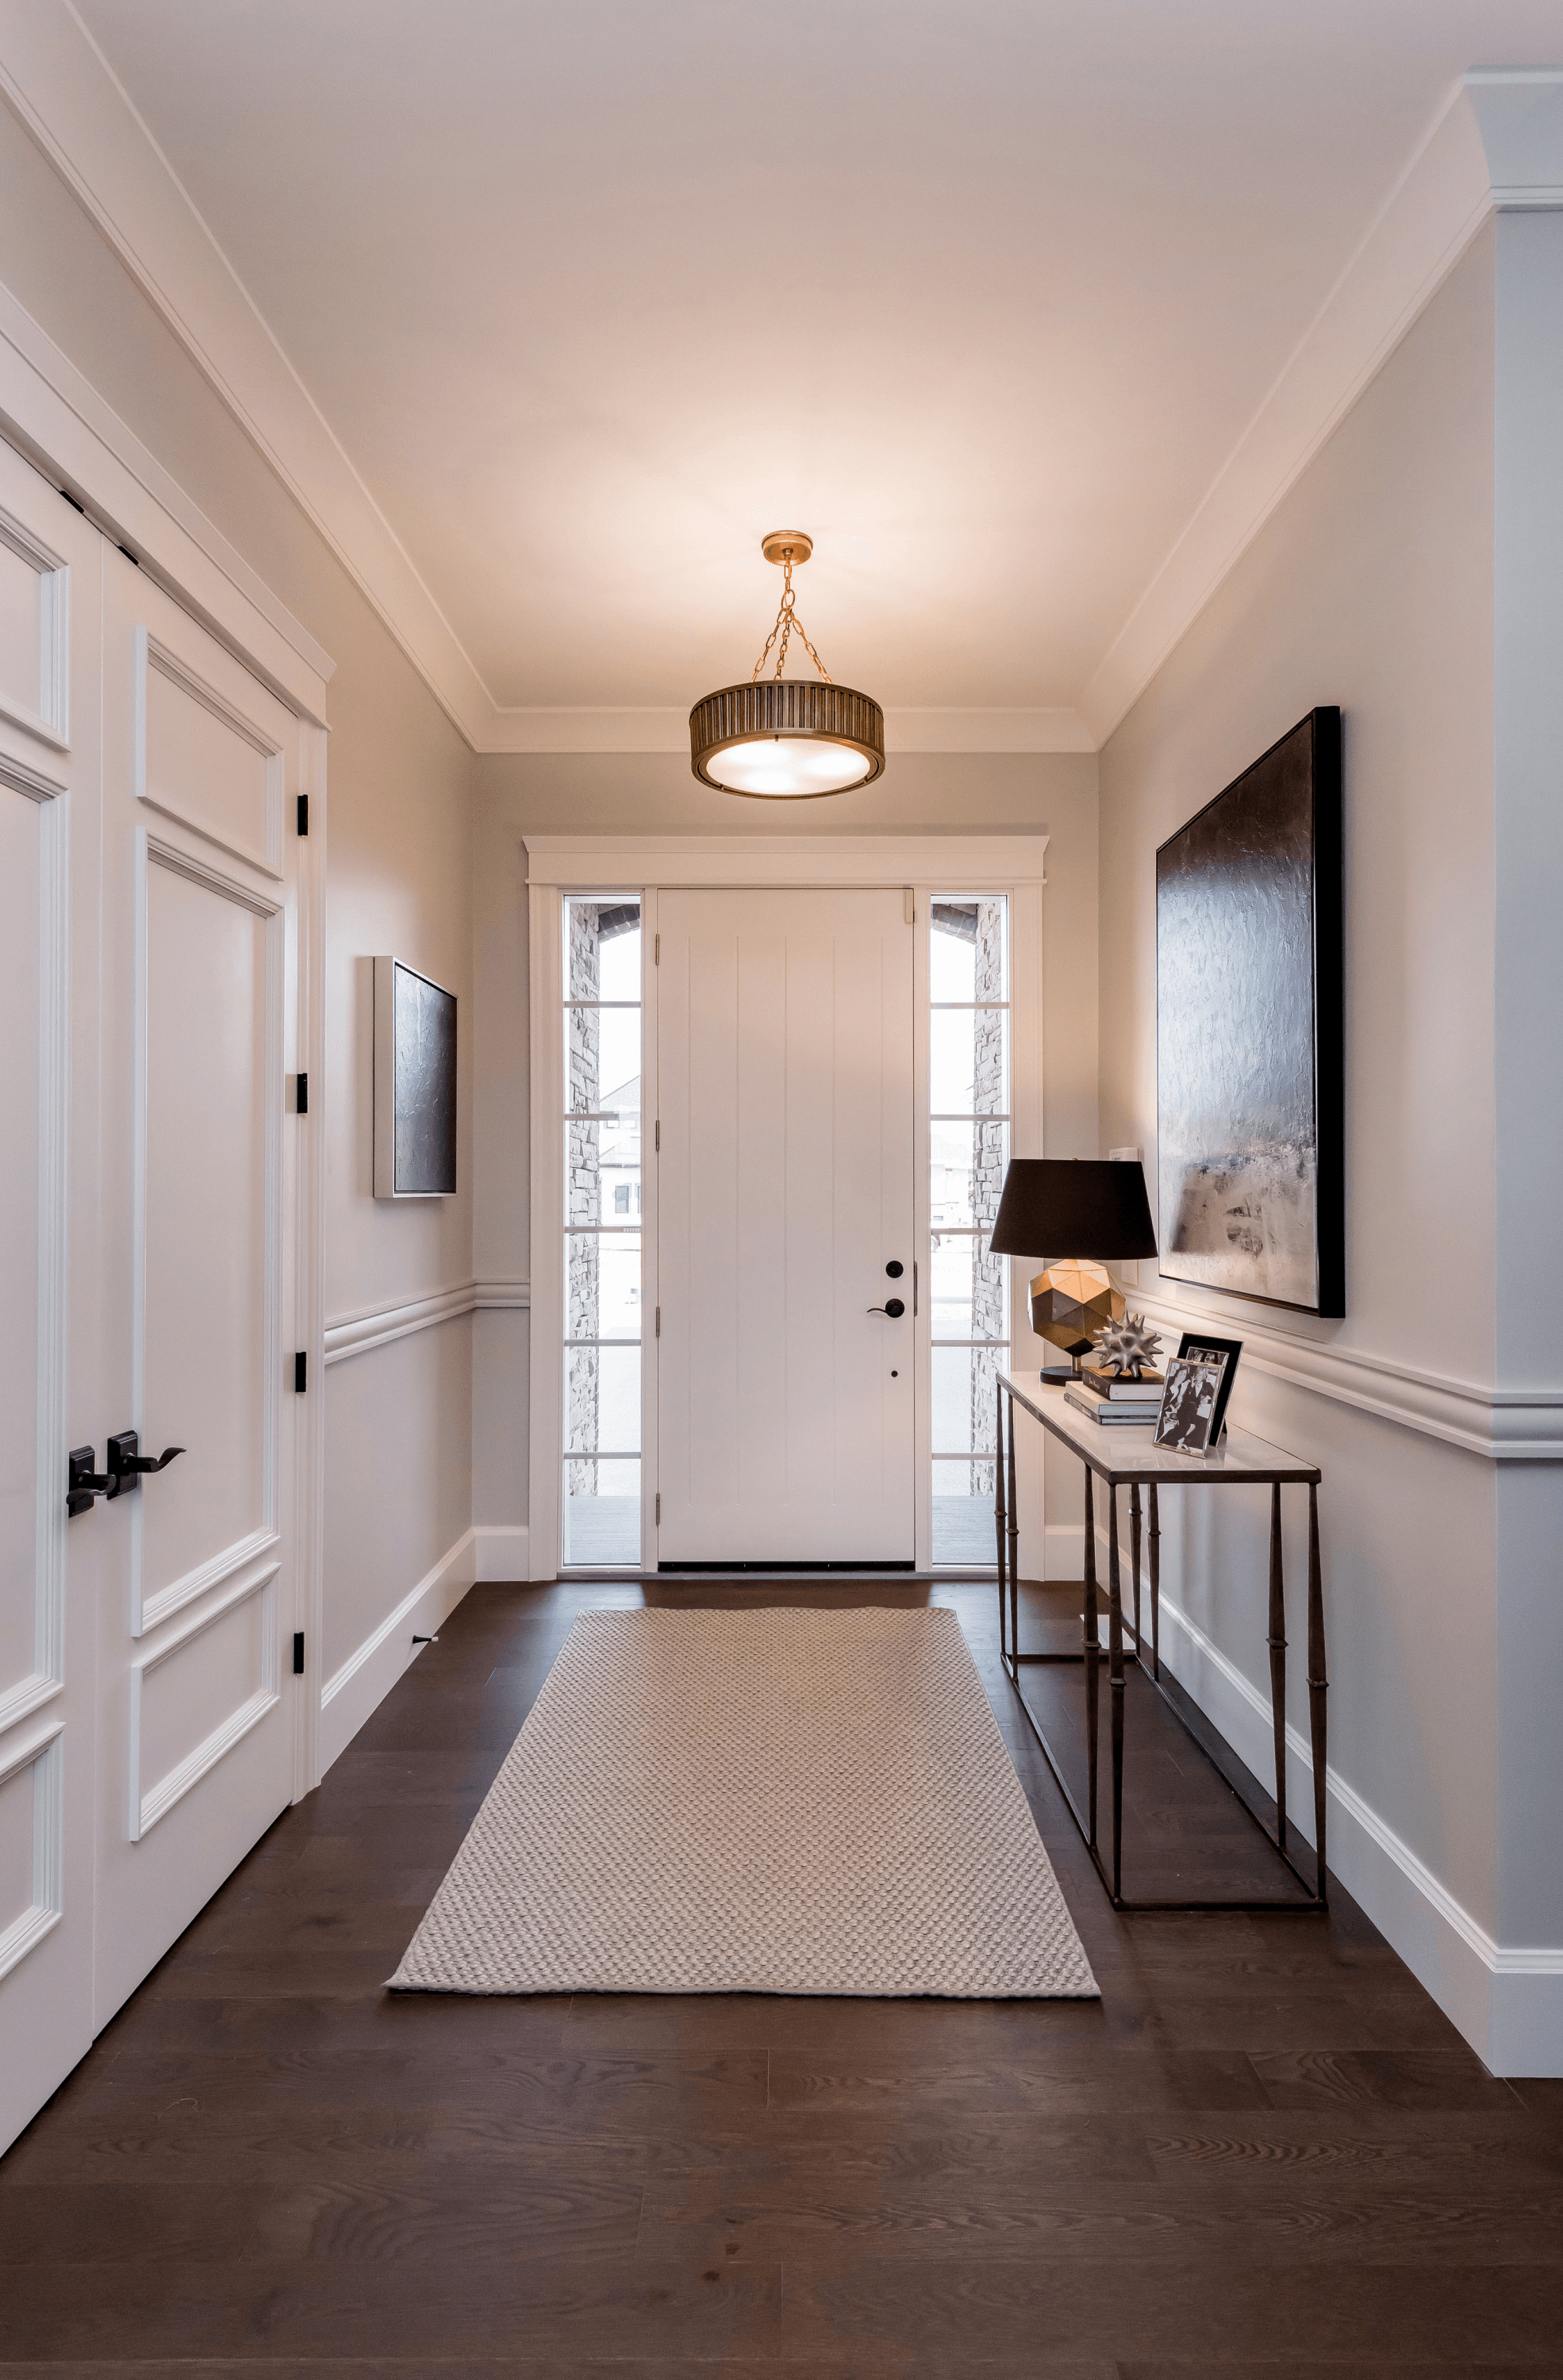 For Blog Only - Atmosphere Interior Design - Hallway Panels